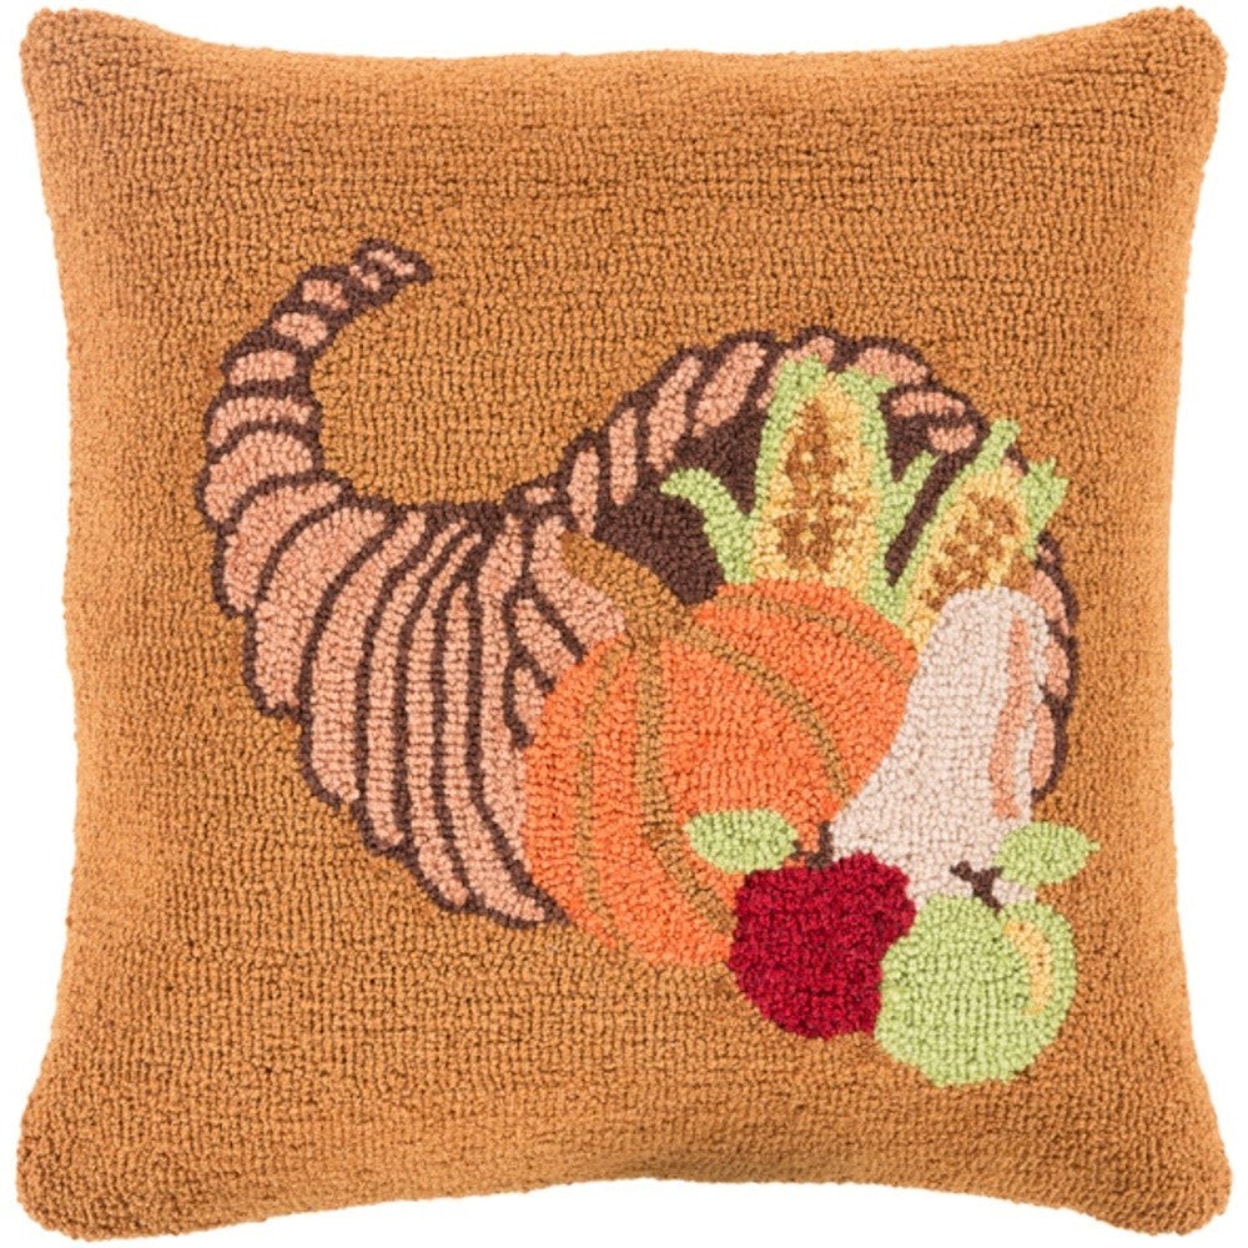 Surya Fall Harvest Pillow